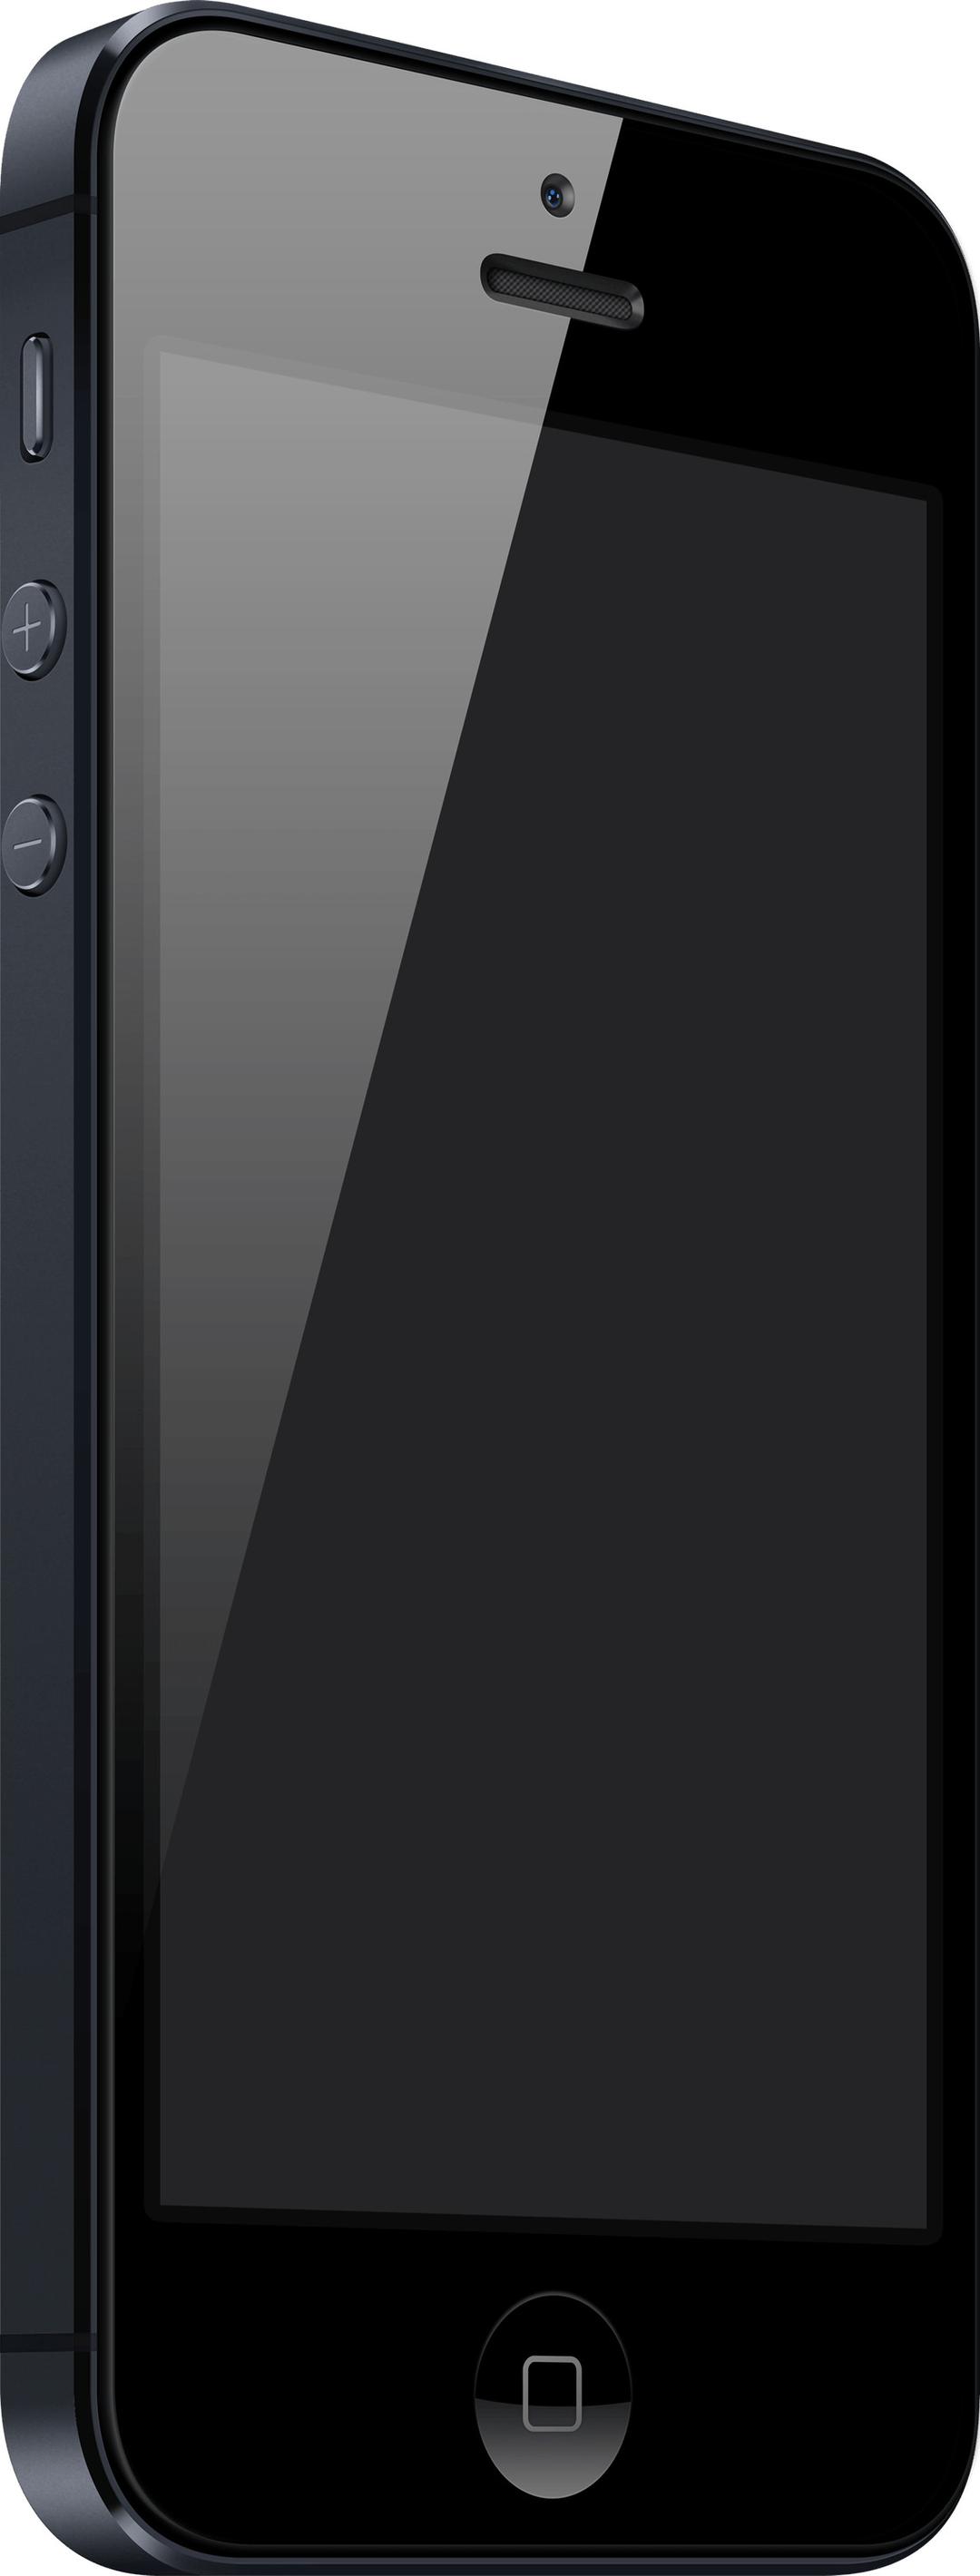 Large Black Iphone png transparent